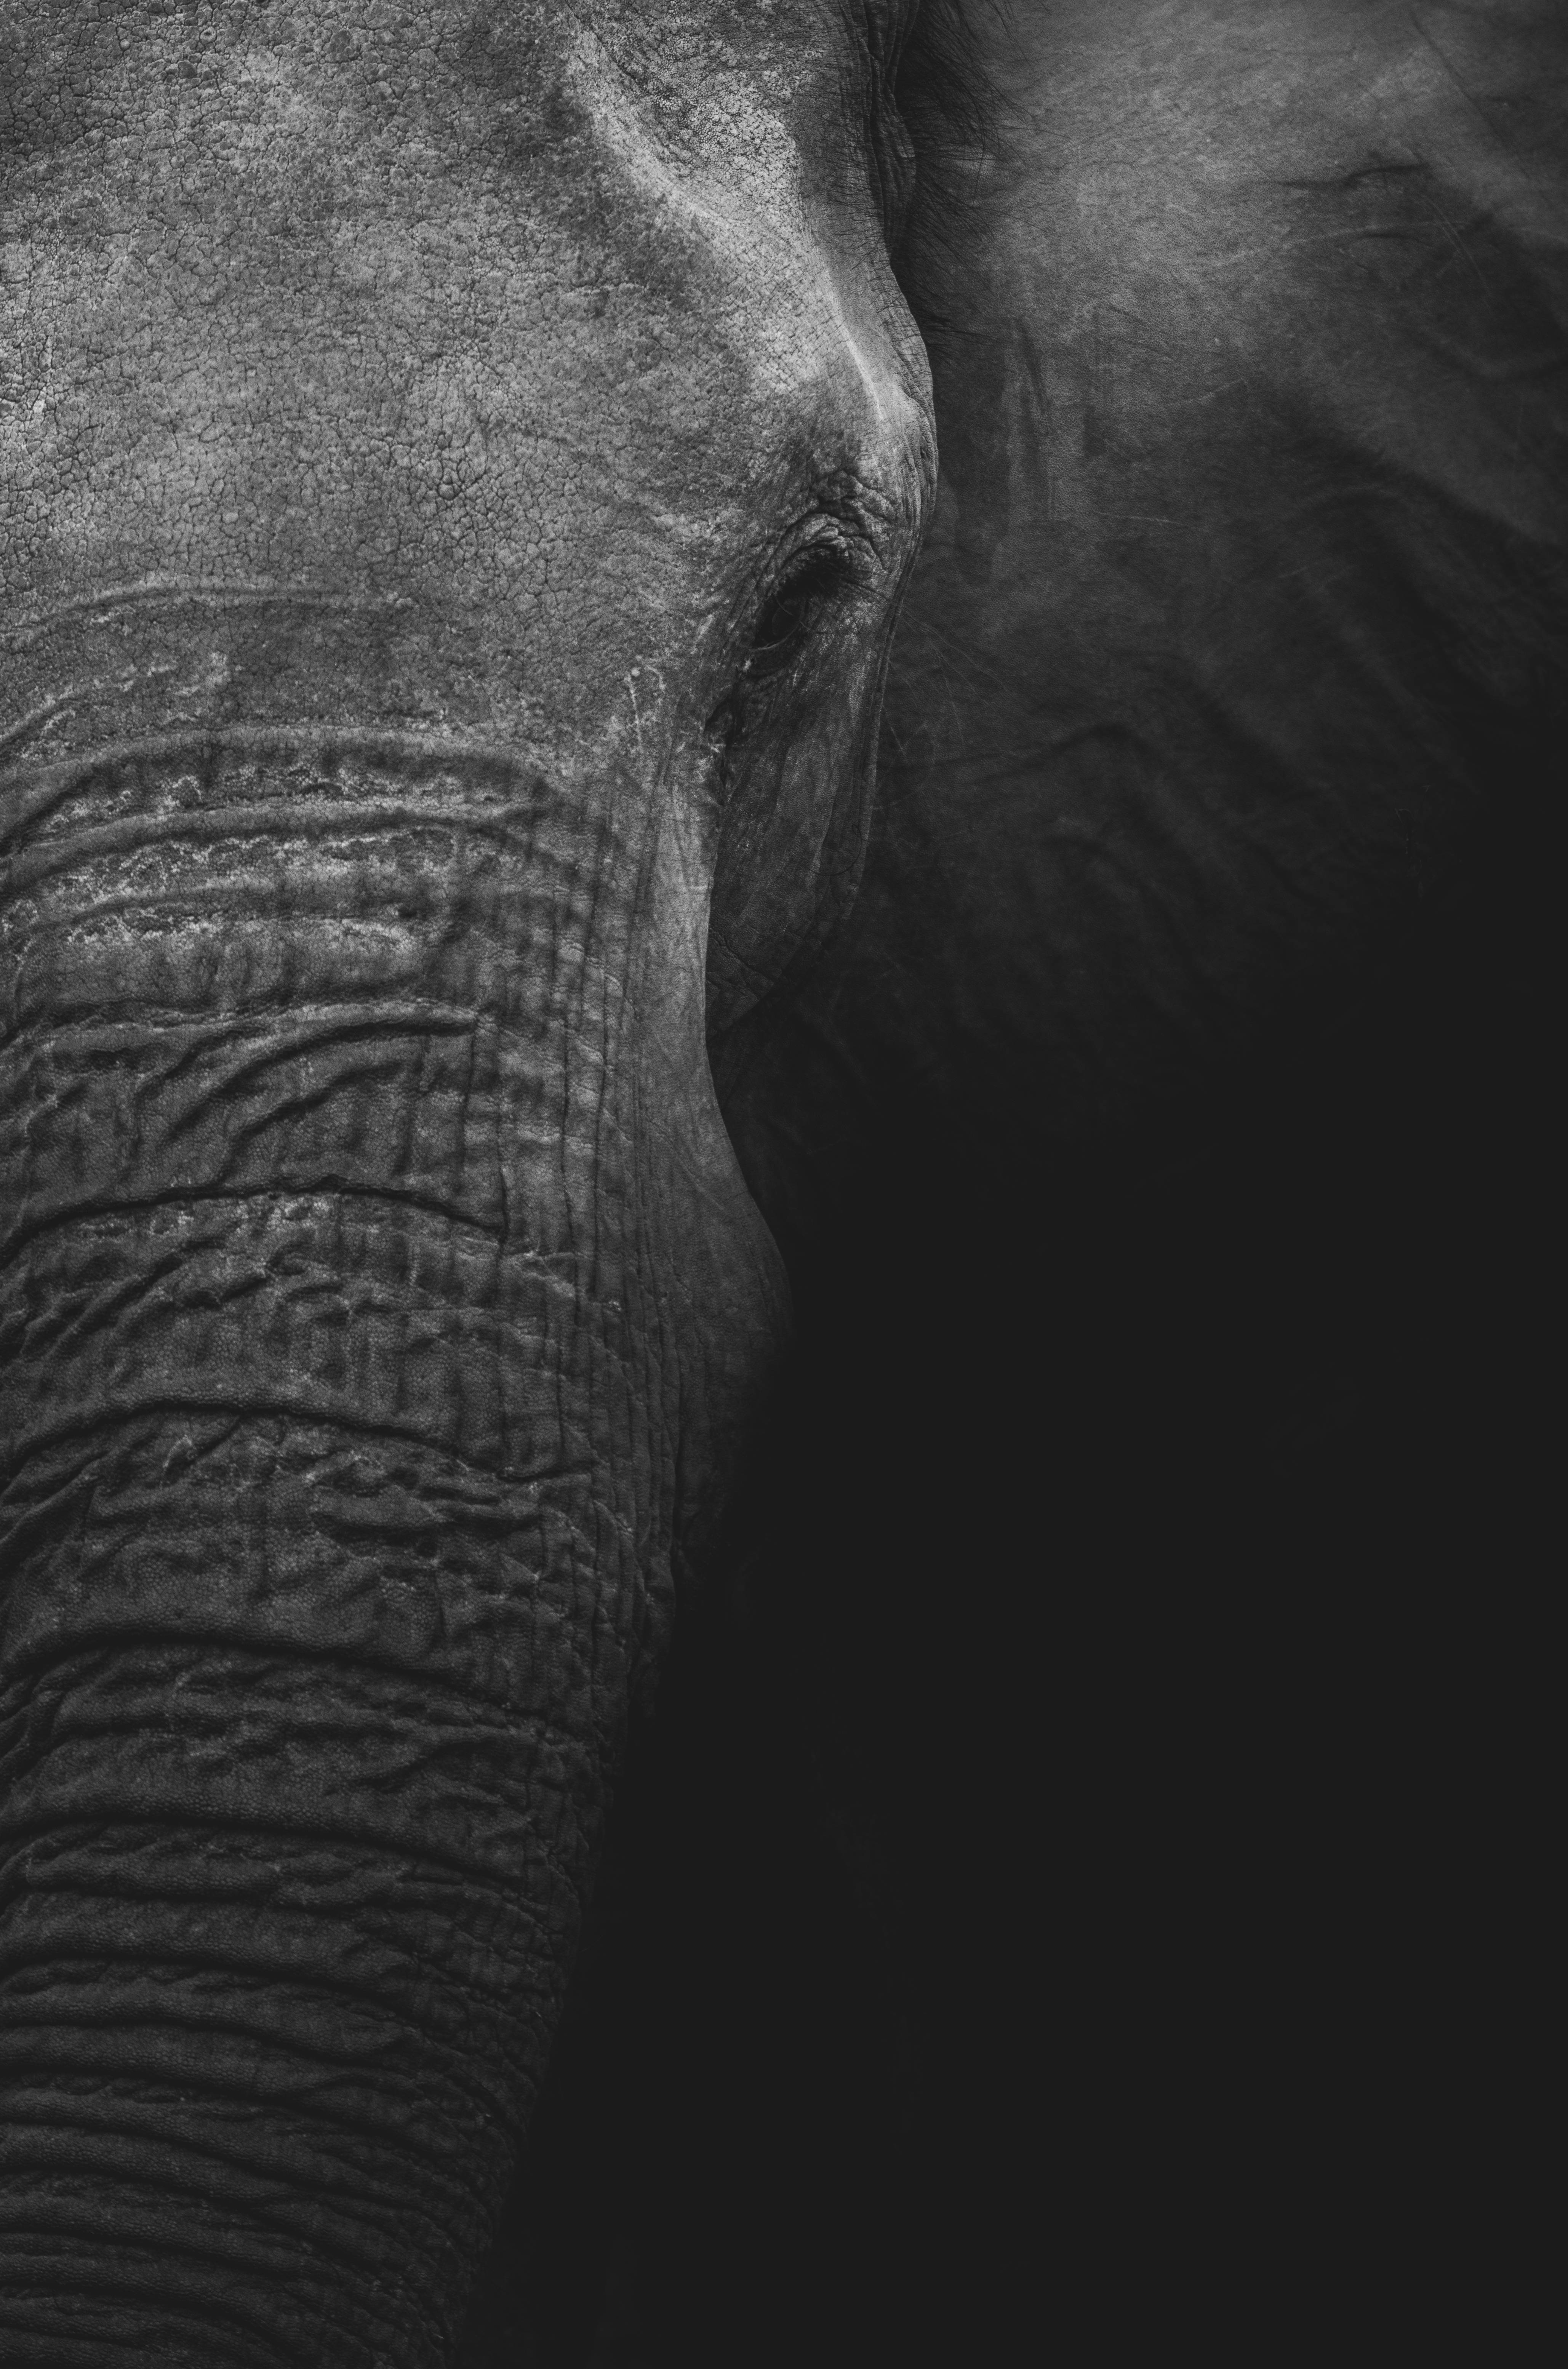 4k Elephant Portrait Grayscale Background